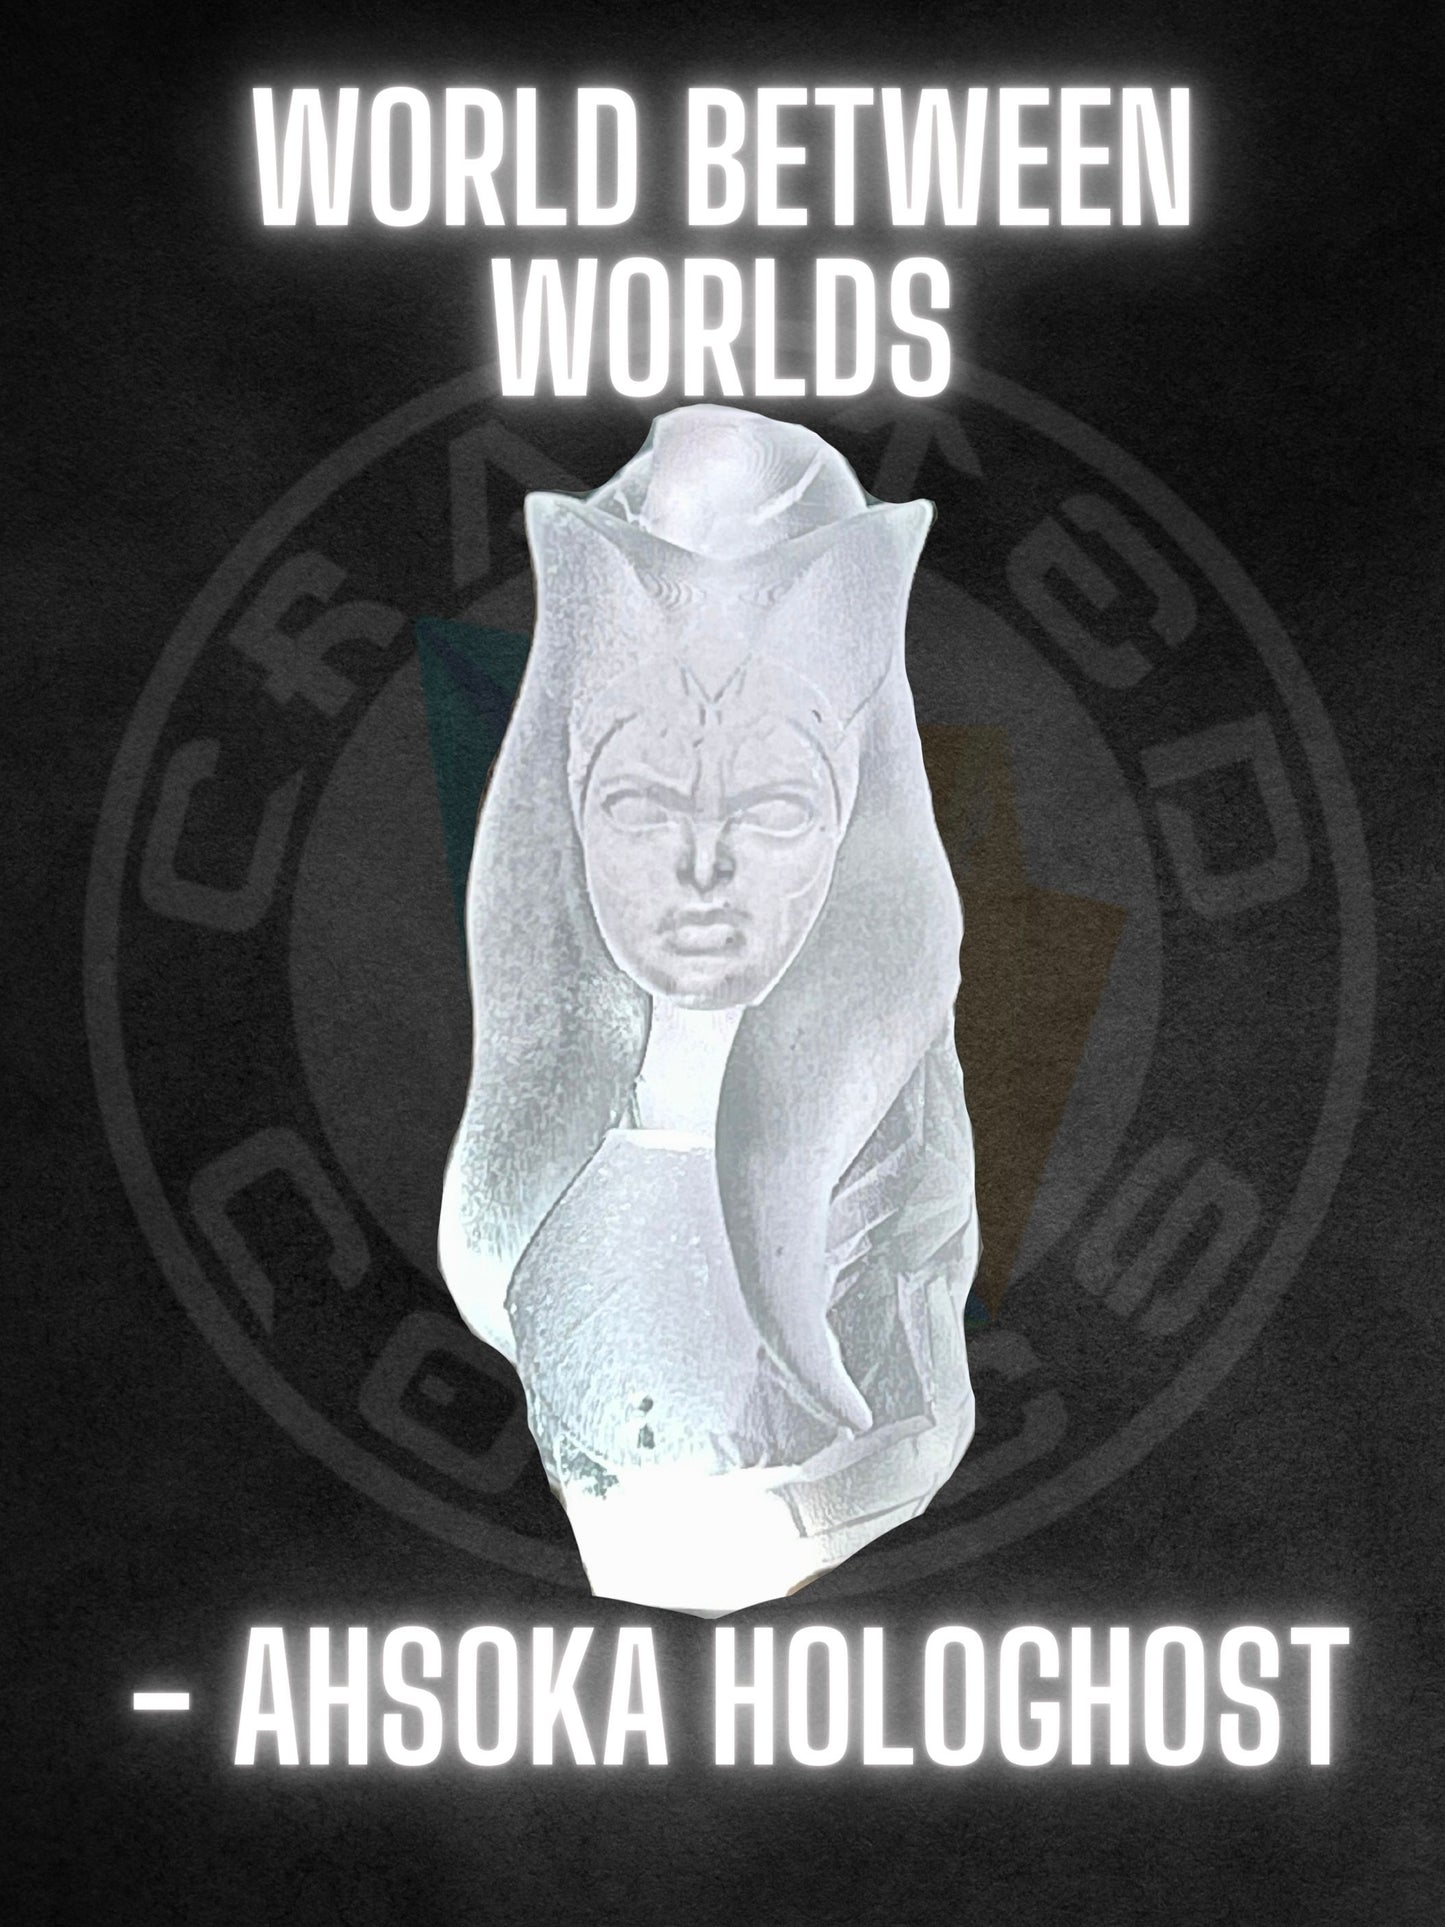 Ahsoka Hologhost - World Between Worlds -